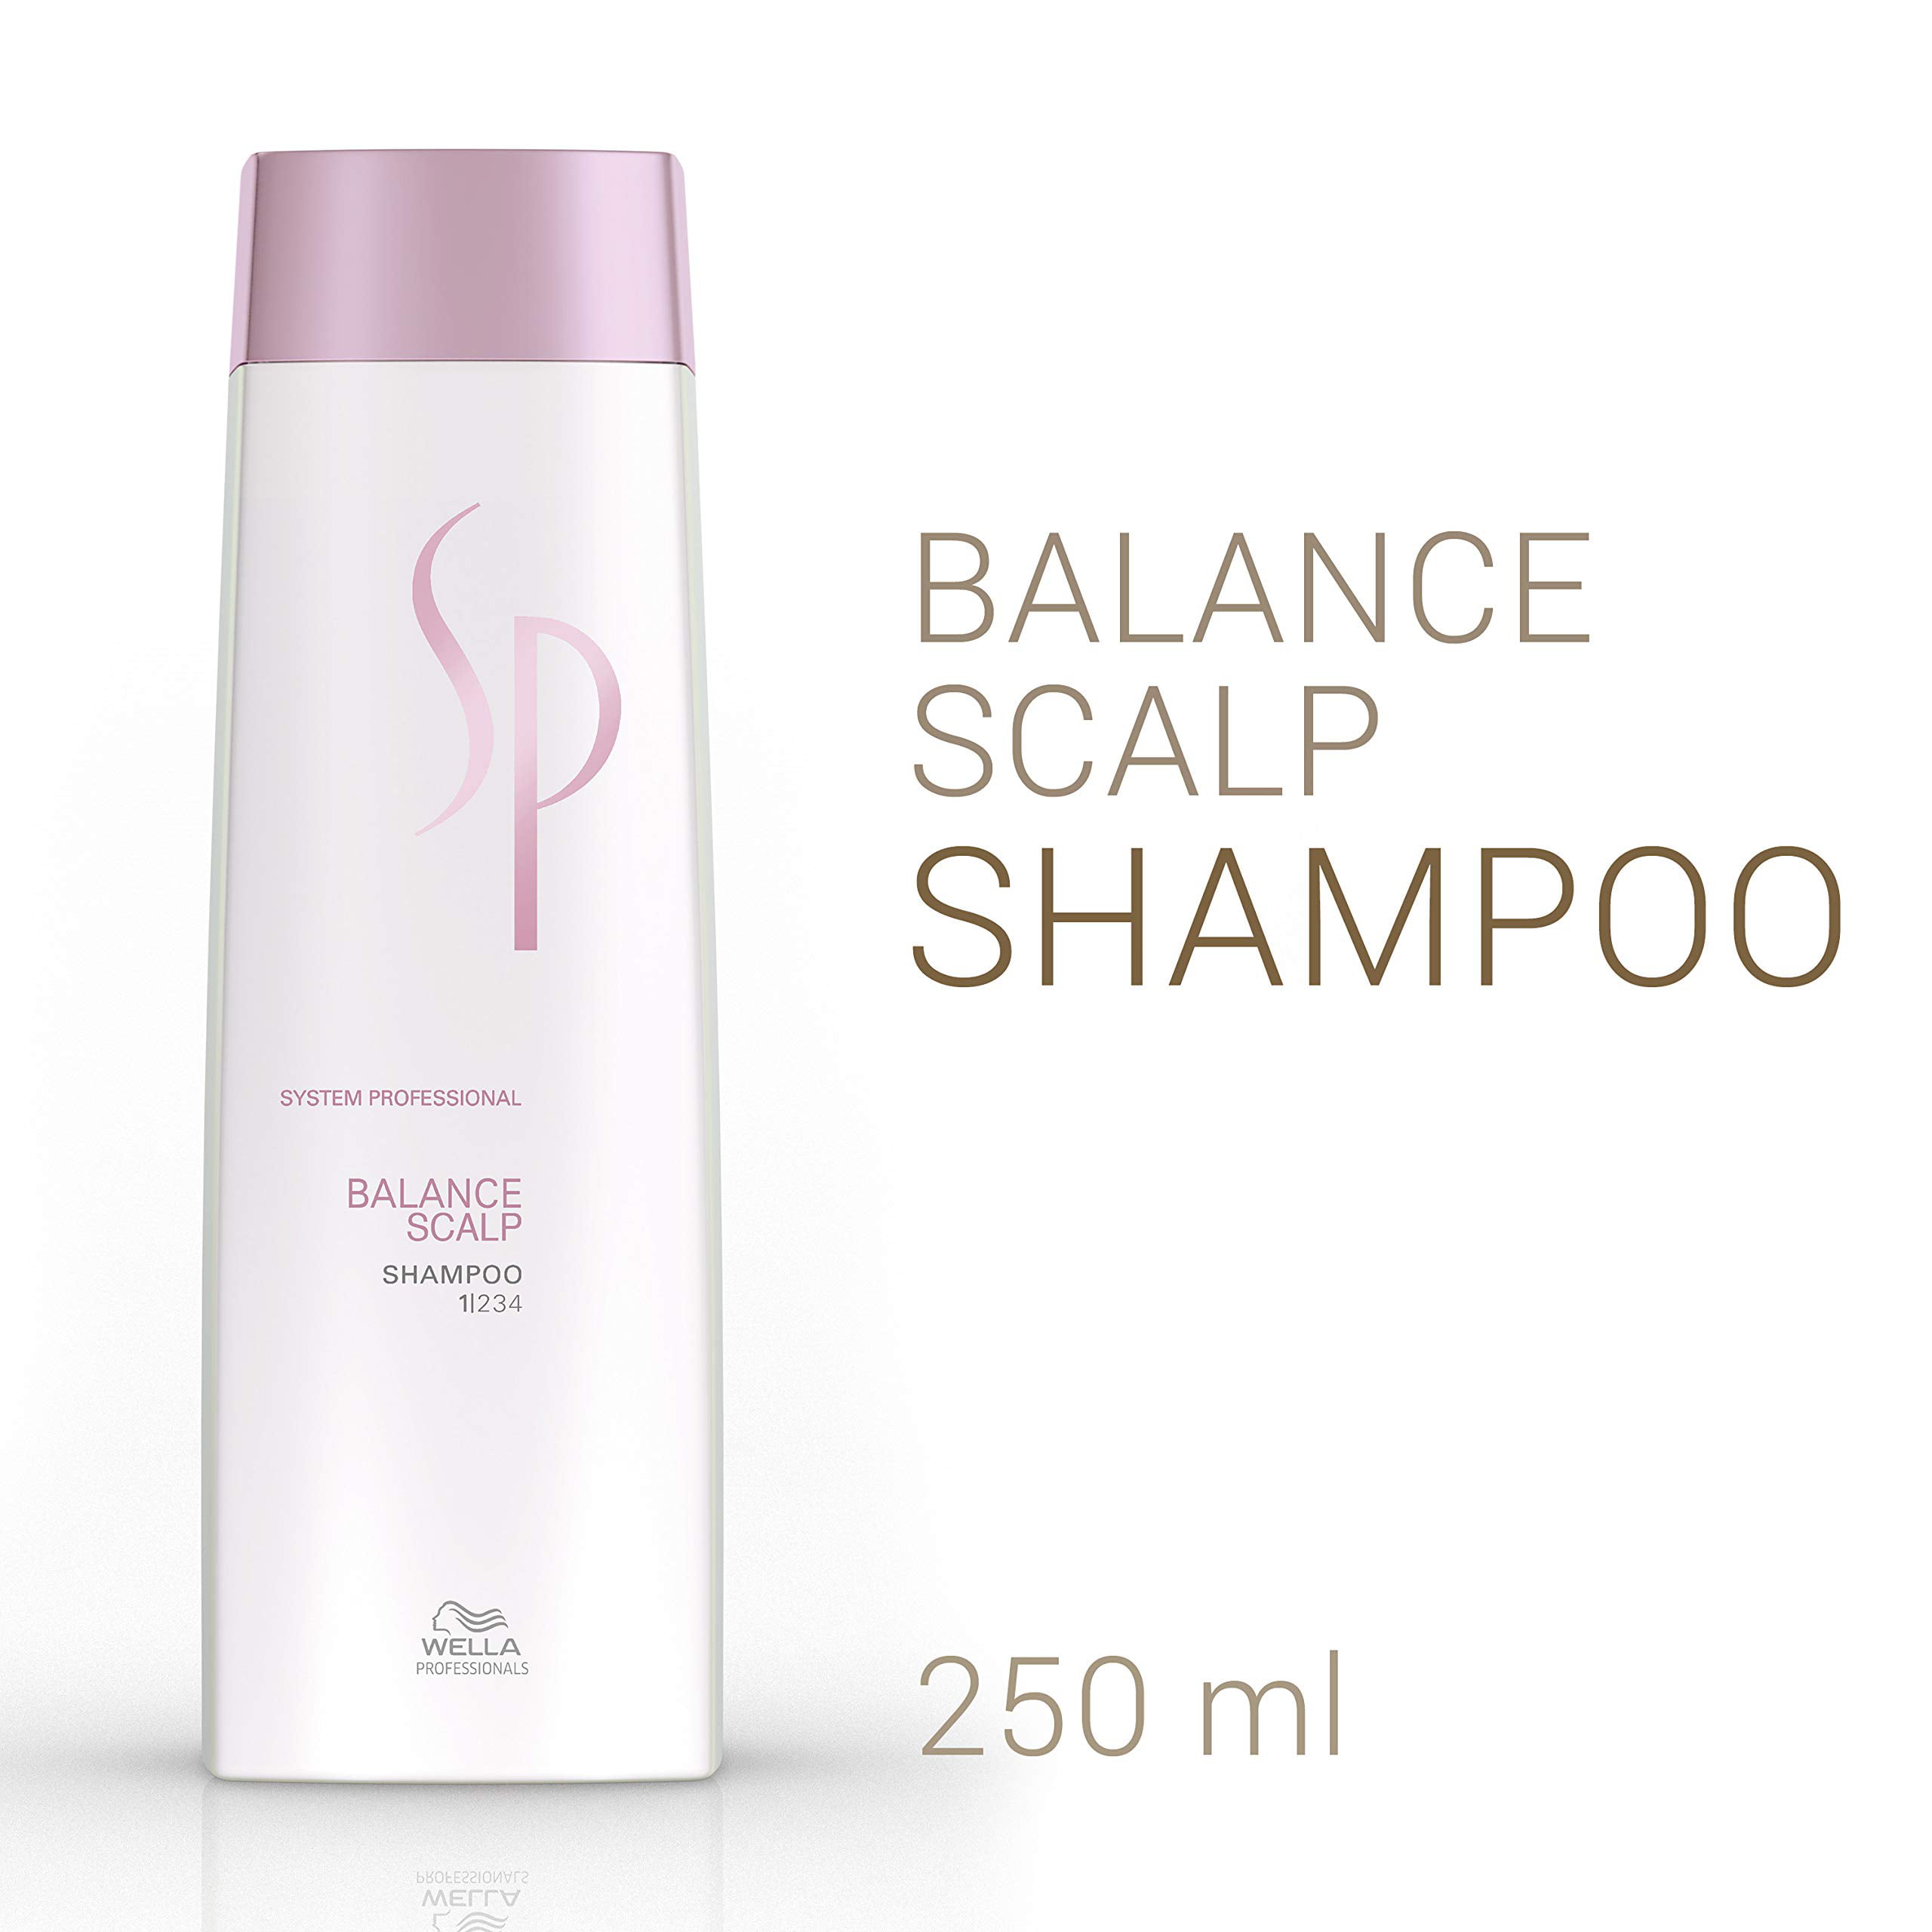 sekvens blomst operation wella sp balance scalp shampoo, 8.5 ounce - Walmart.com